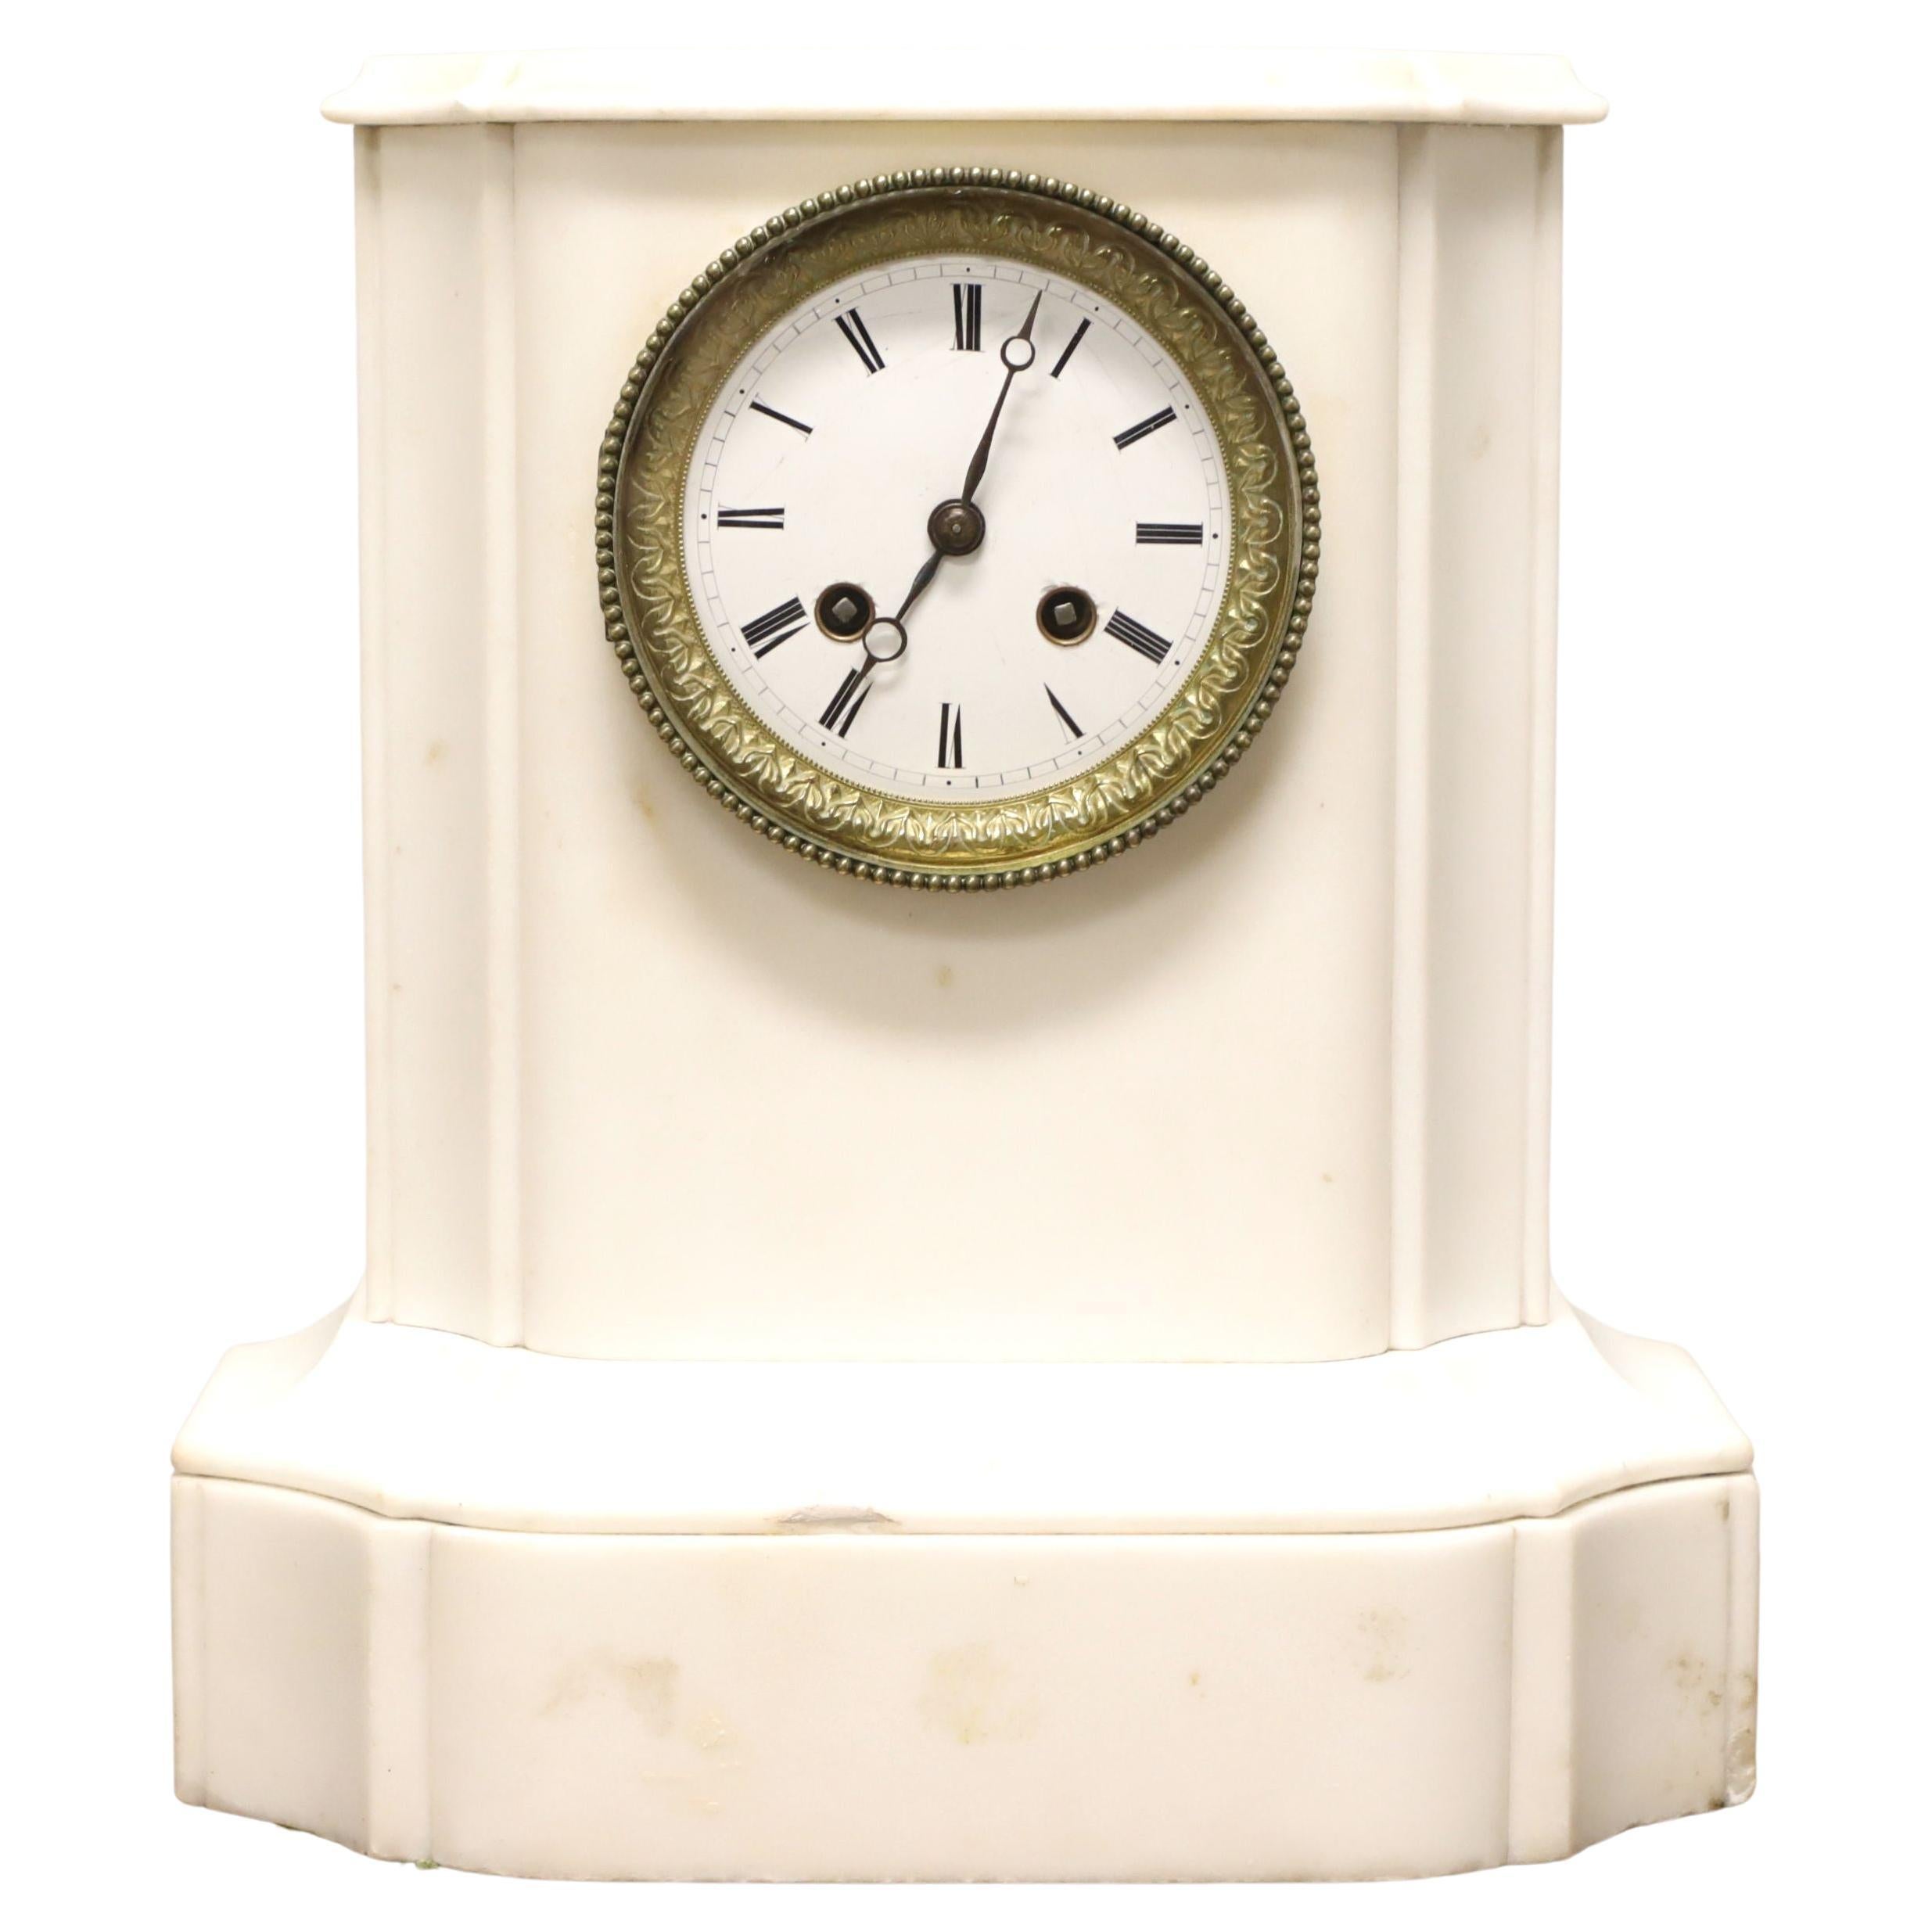 How do I fix a chime on a mantel clock?